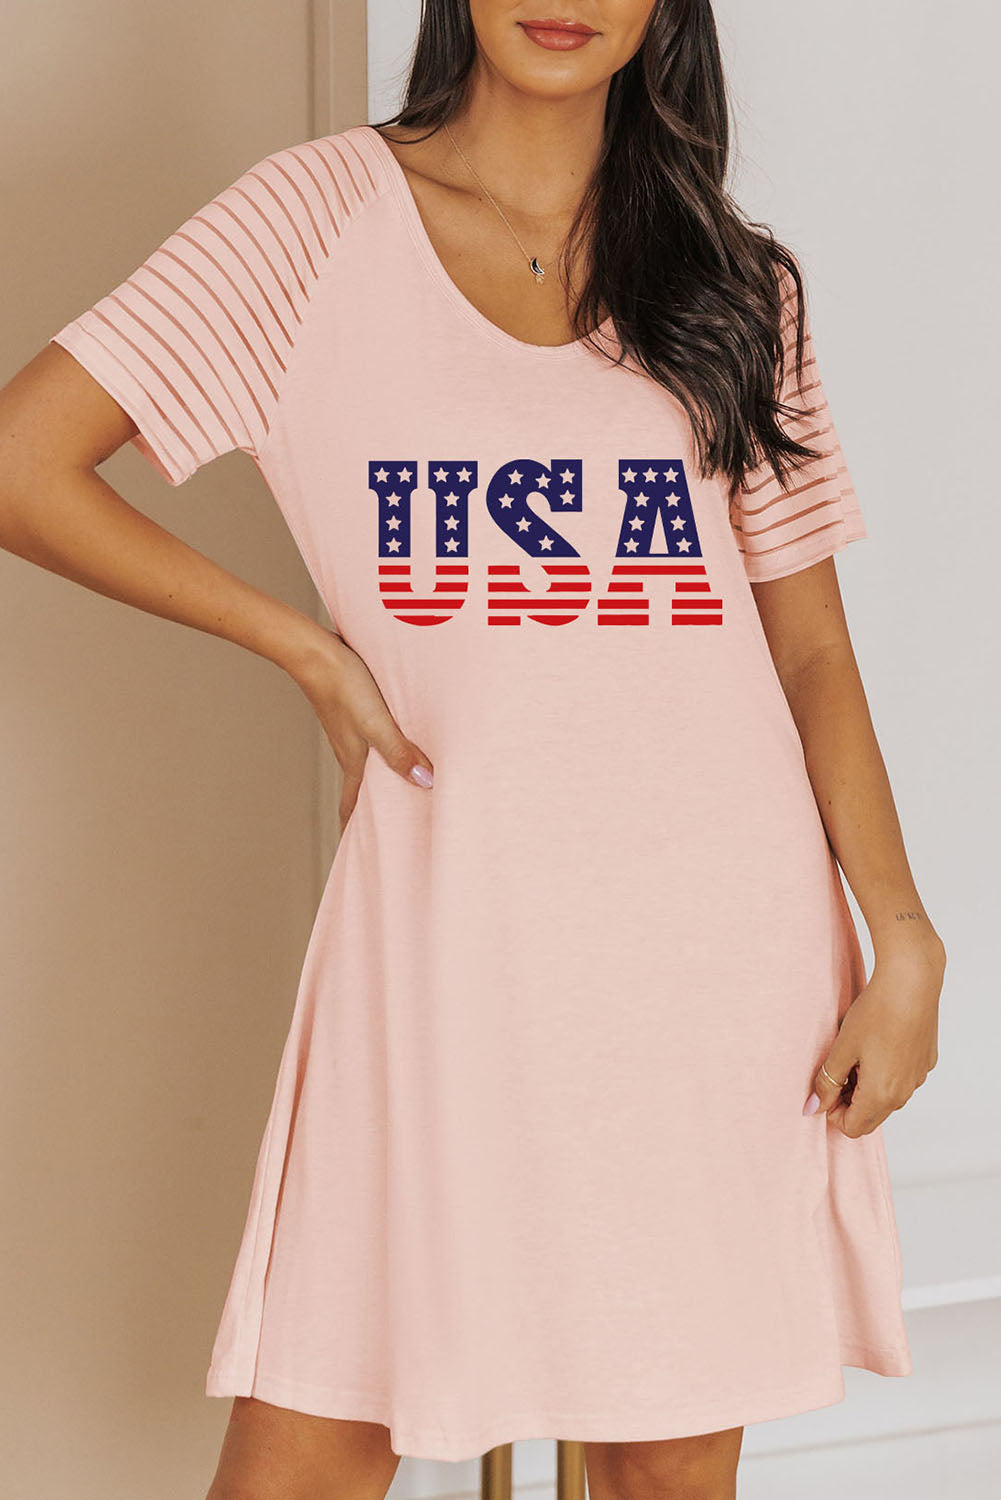 USA Sheer Striped Raglan Sleeve Tee Dress